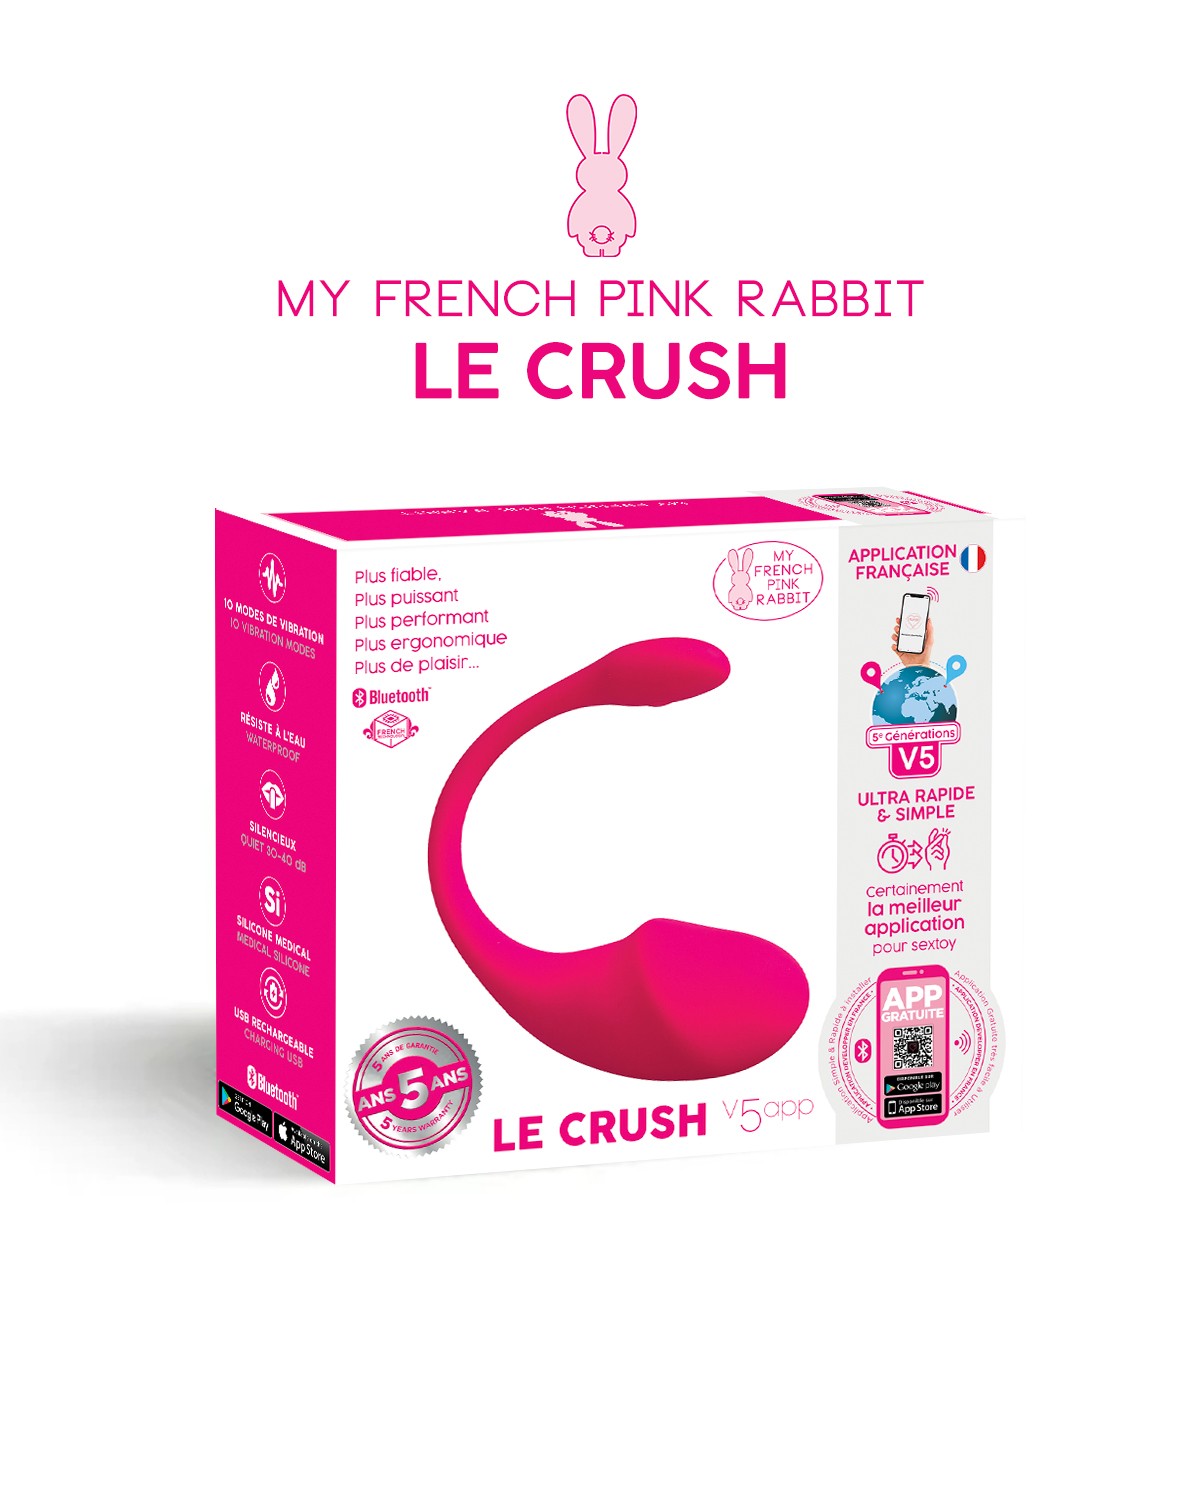 Le Crush - Oeuf Vibrant connecté via application